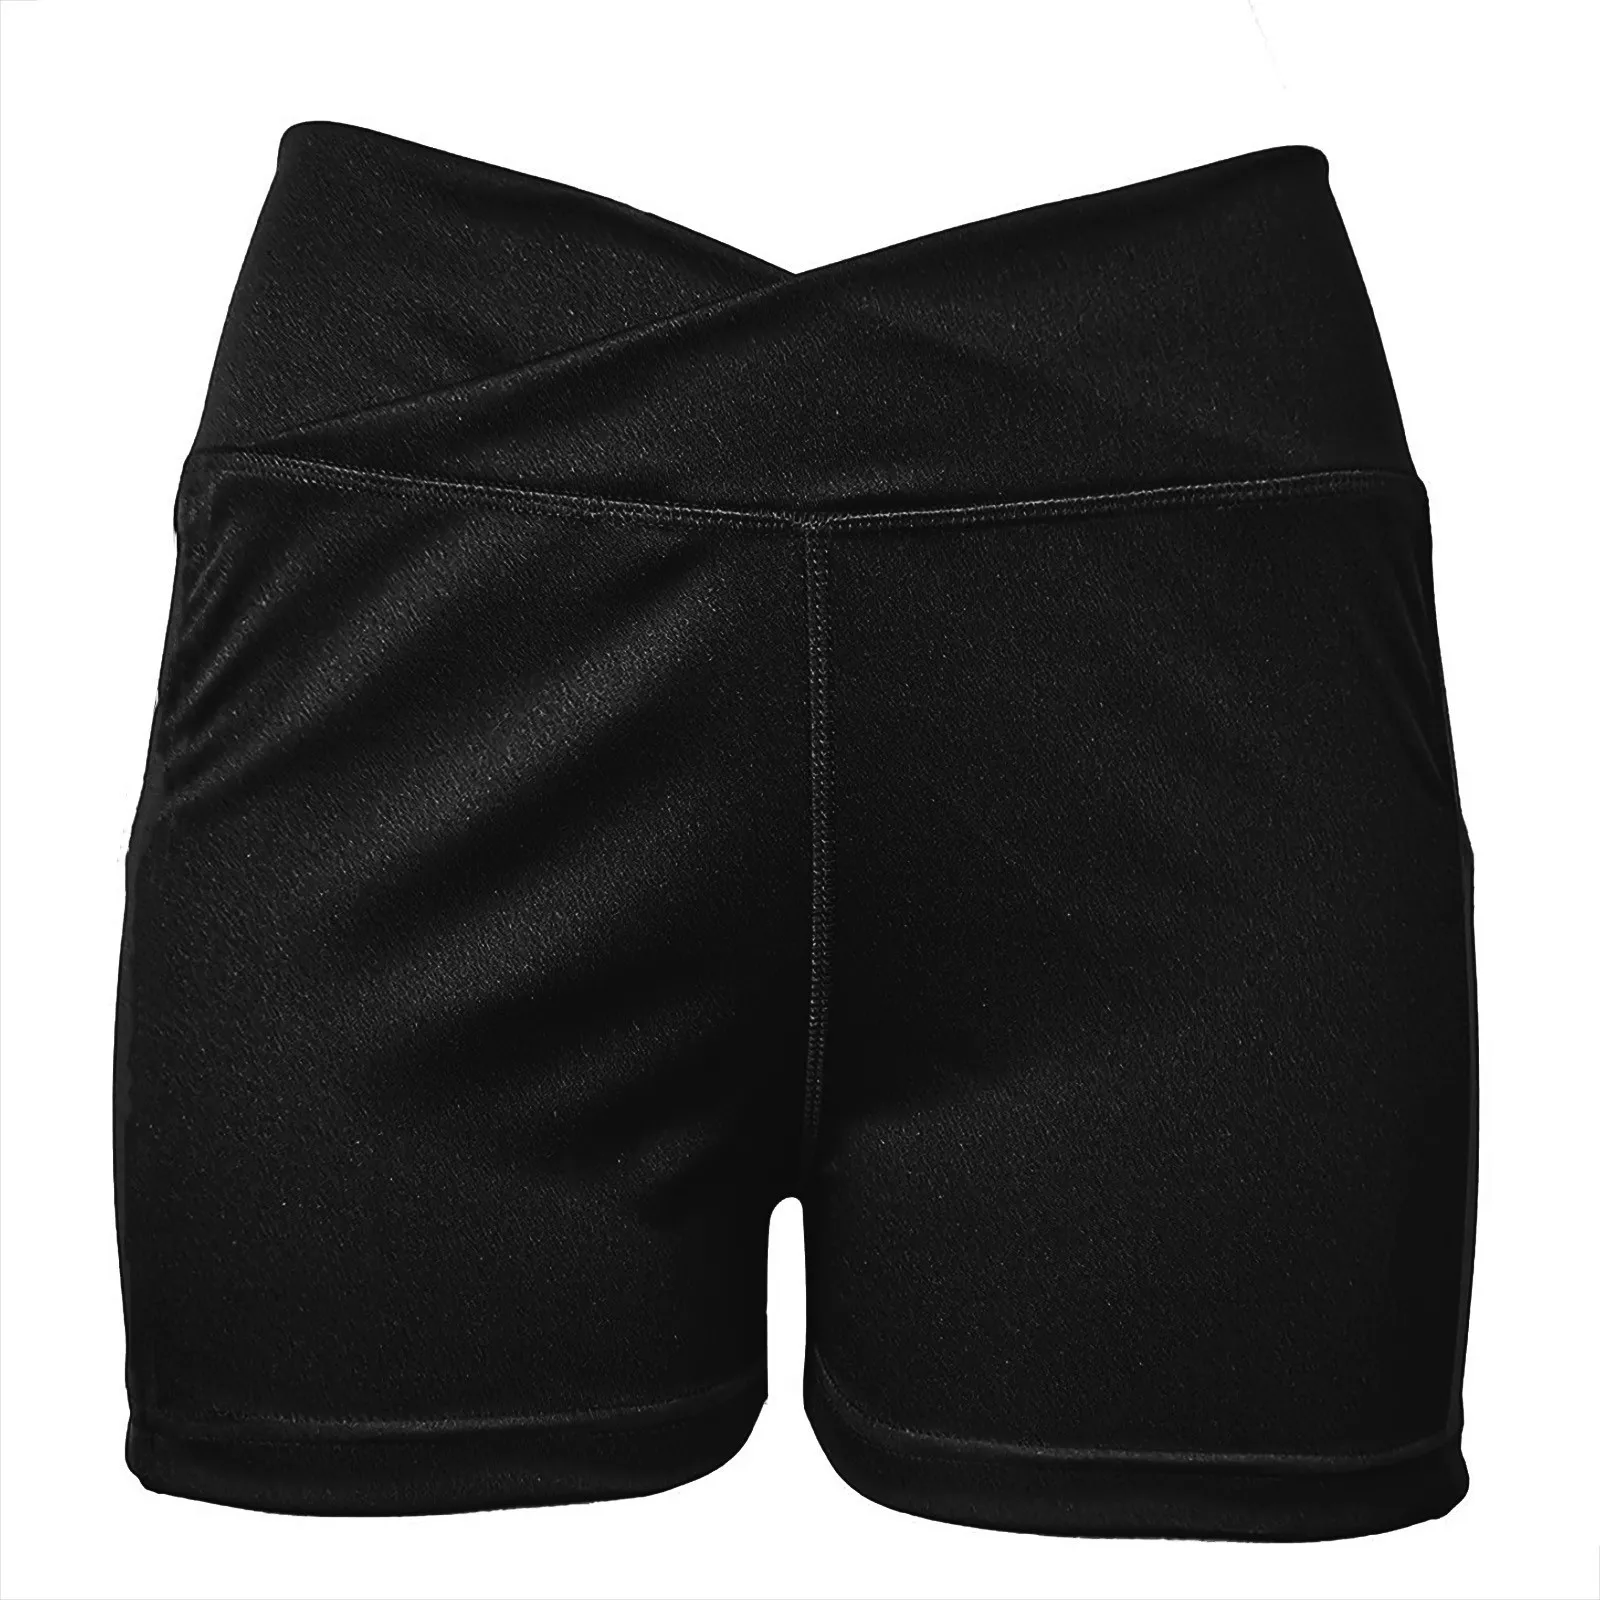 

Women Solid Shorts Compression Workout High Waisted Shorts Leggings Yoga Black Shorts Pants Roupas Femininas Com Frete Gratis